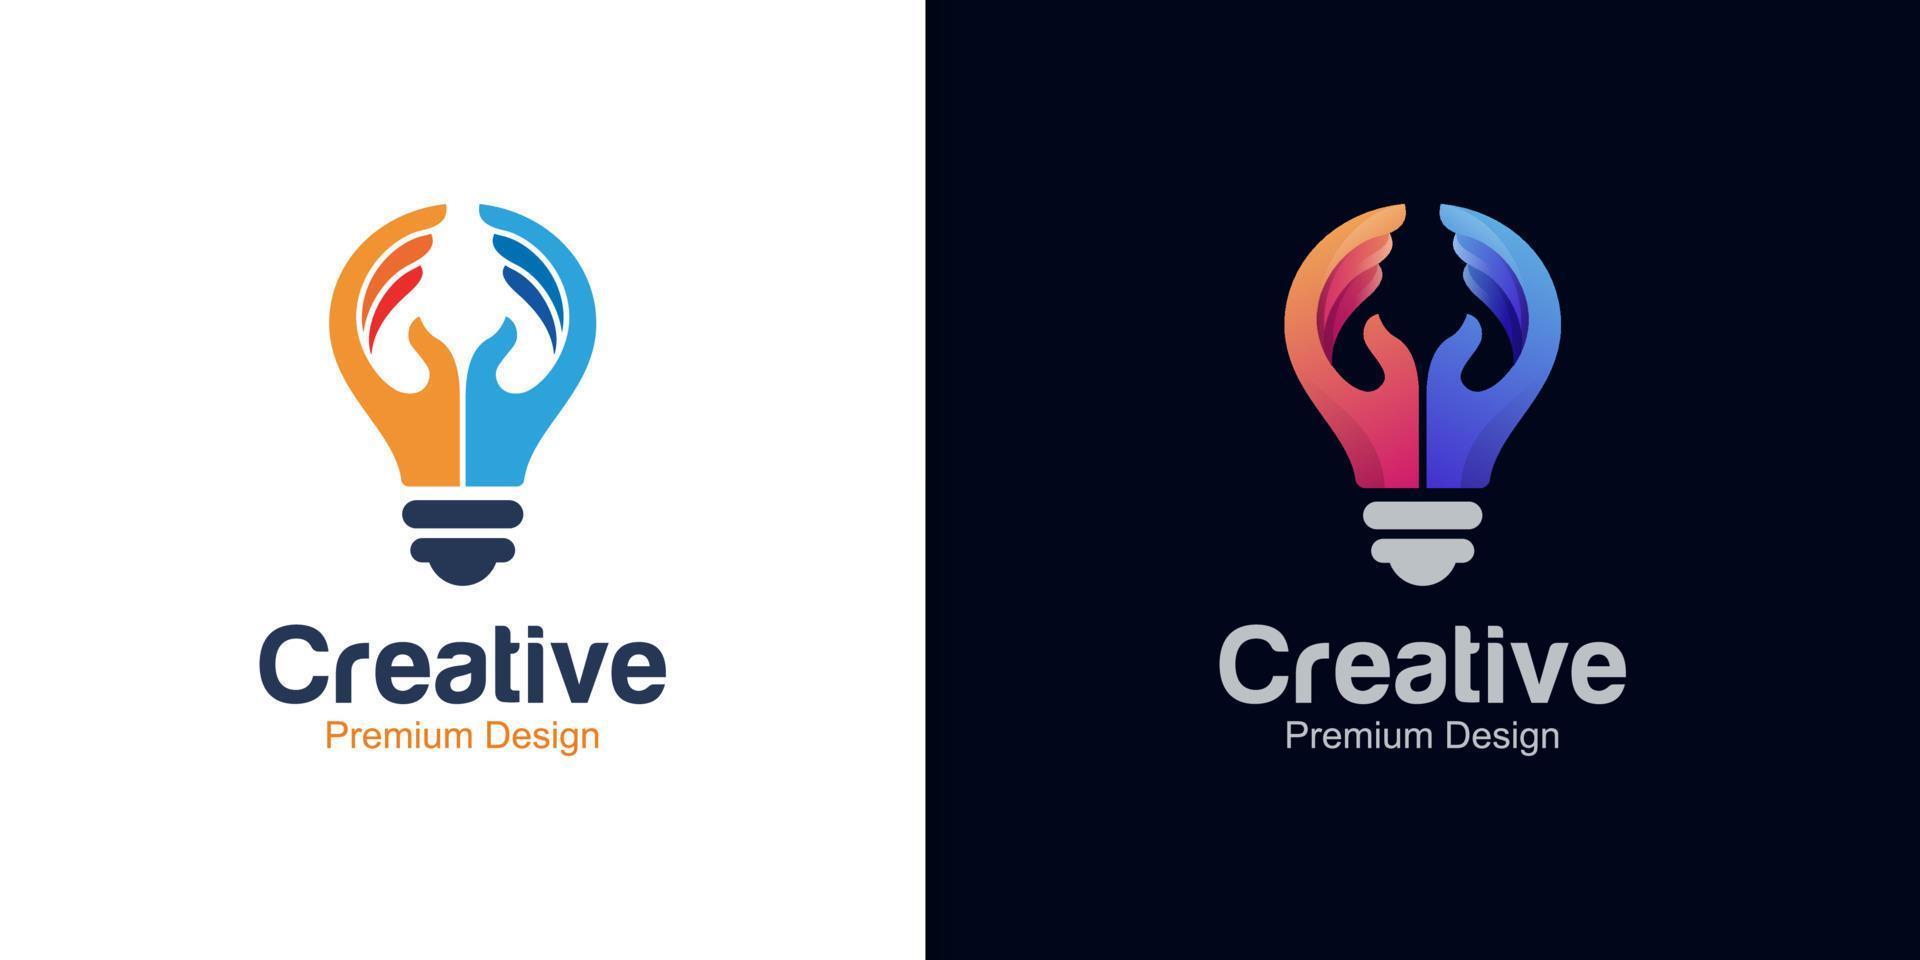 creative idea imagination or innovation logo for life hack creativity hand made vector icon symbol